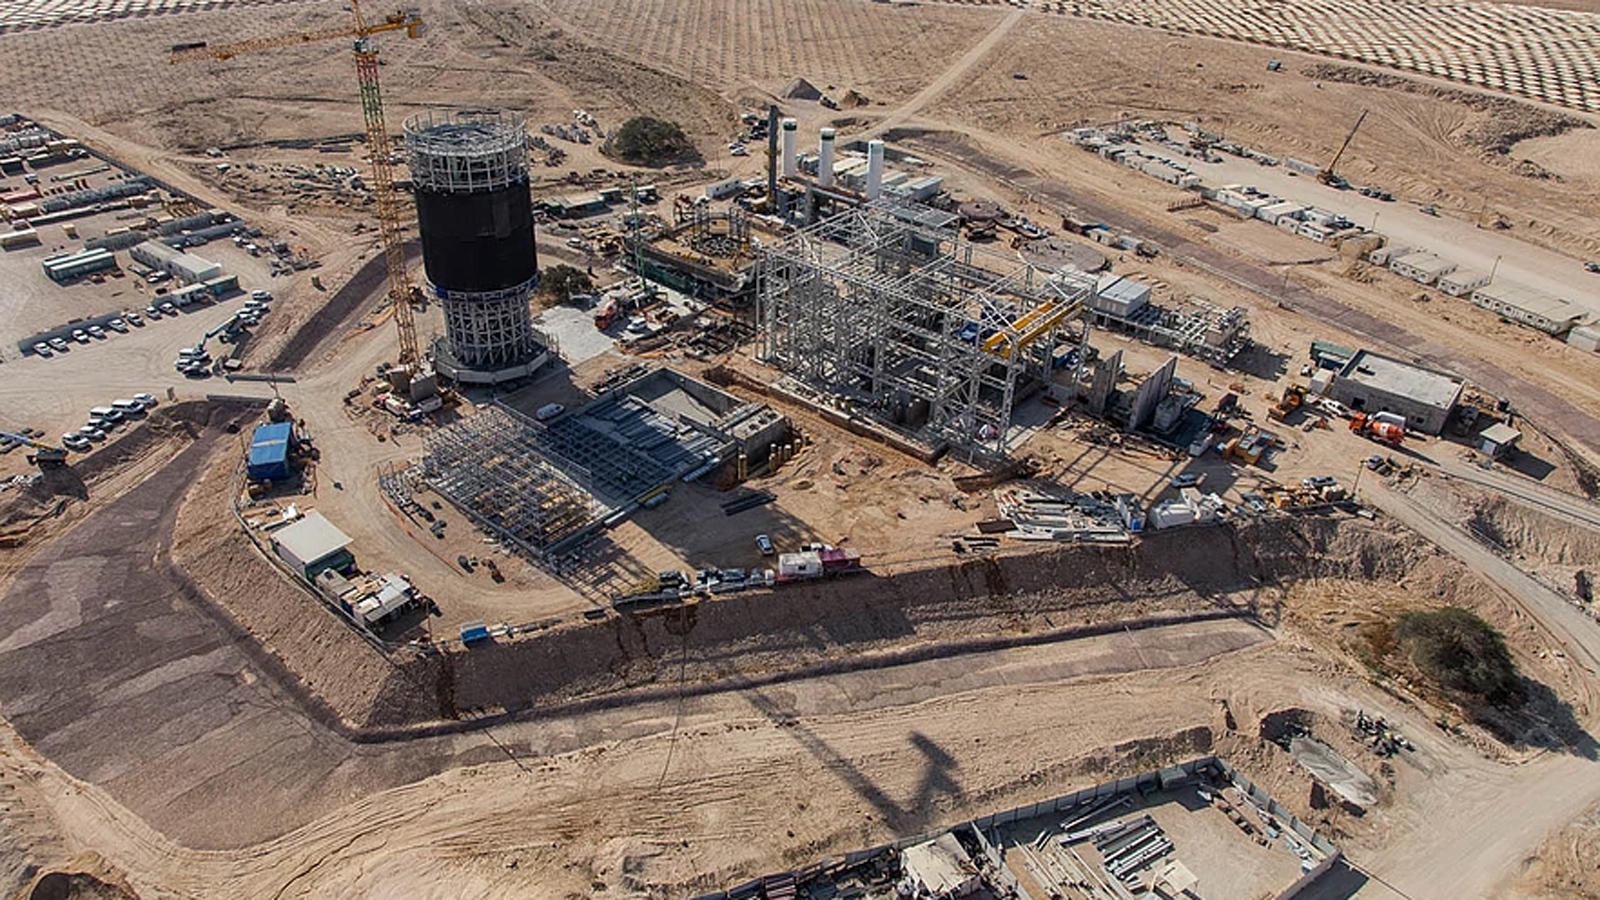 Megalim Solar Power's Ashalim power station now being built in the Negev desert. Courtesy